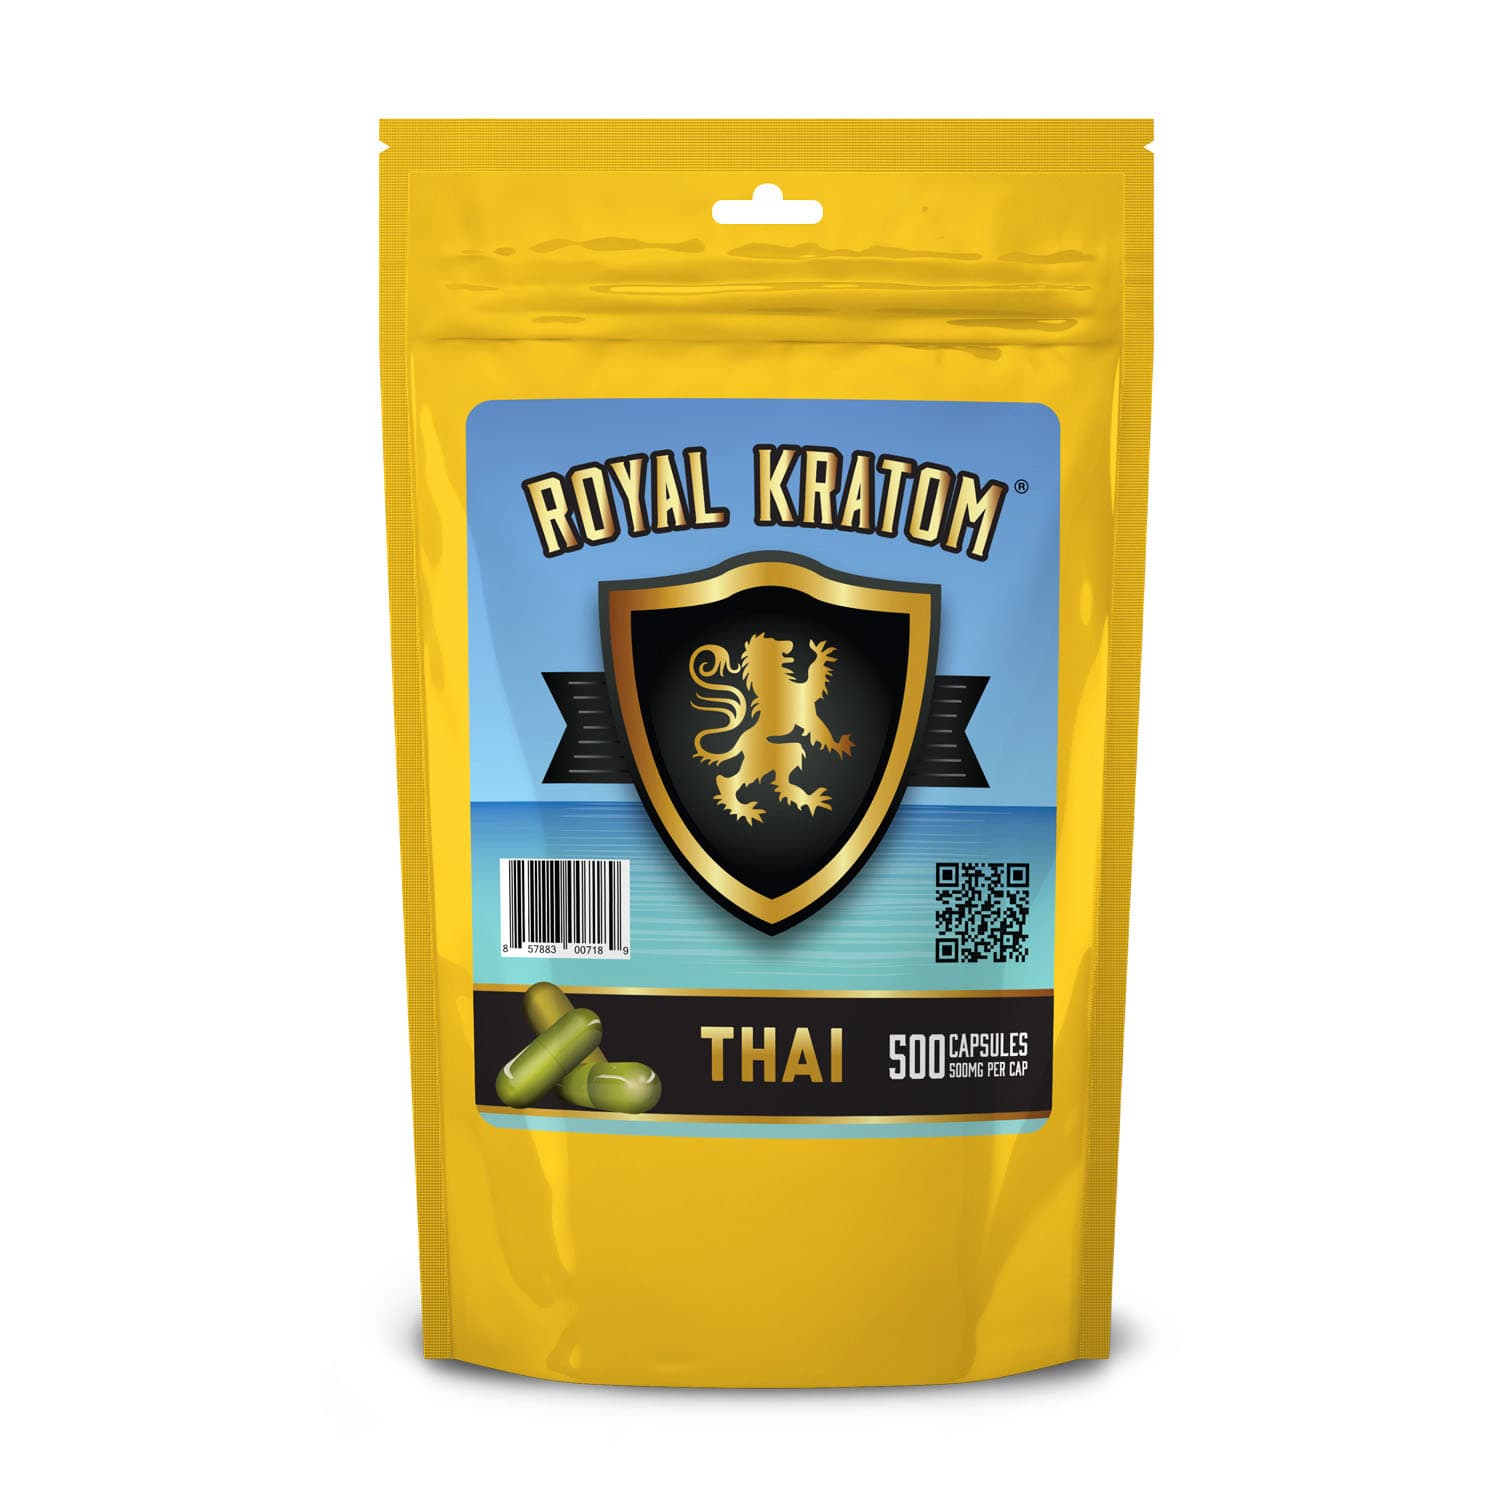 Royal Kratom Thai Kratom Capsules 500 Count front of package